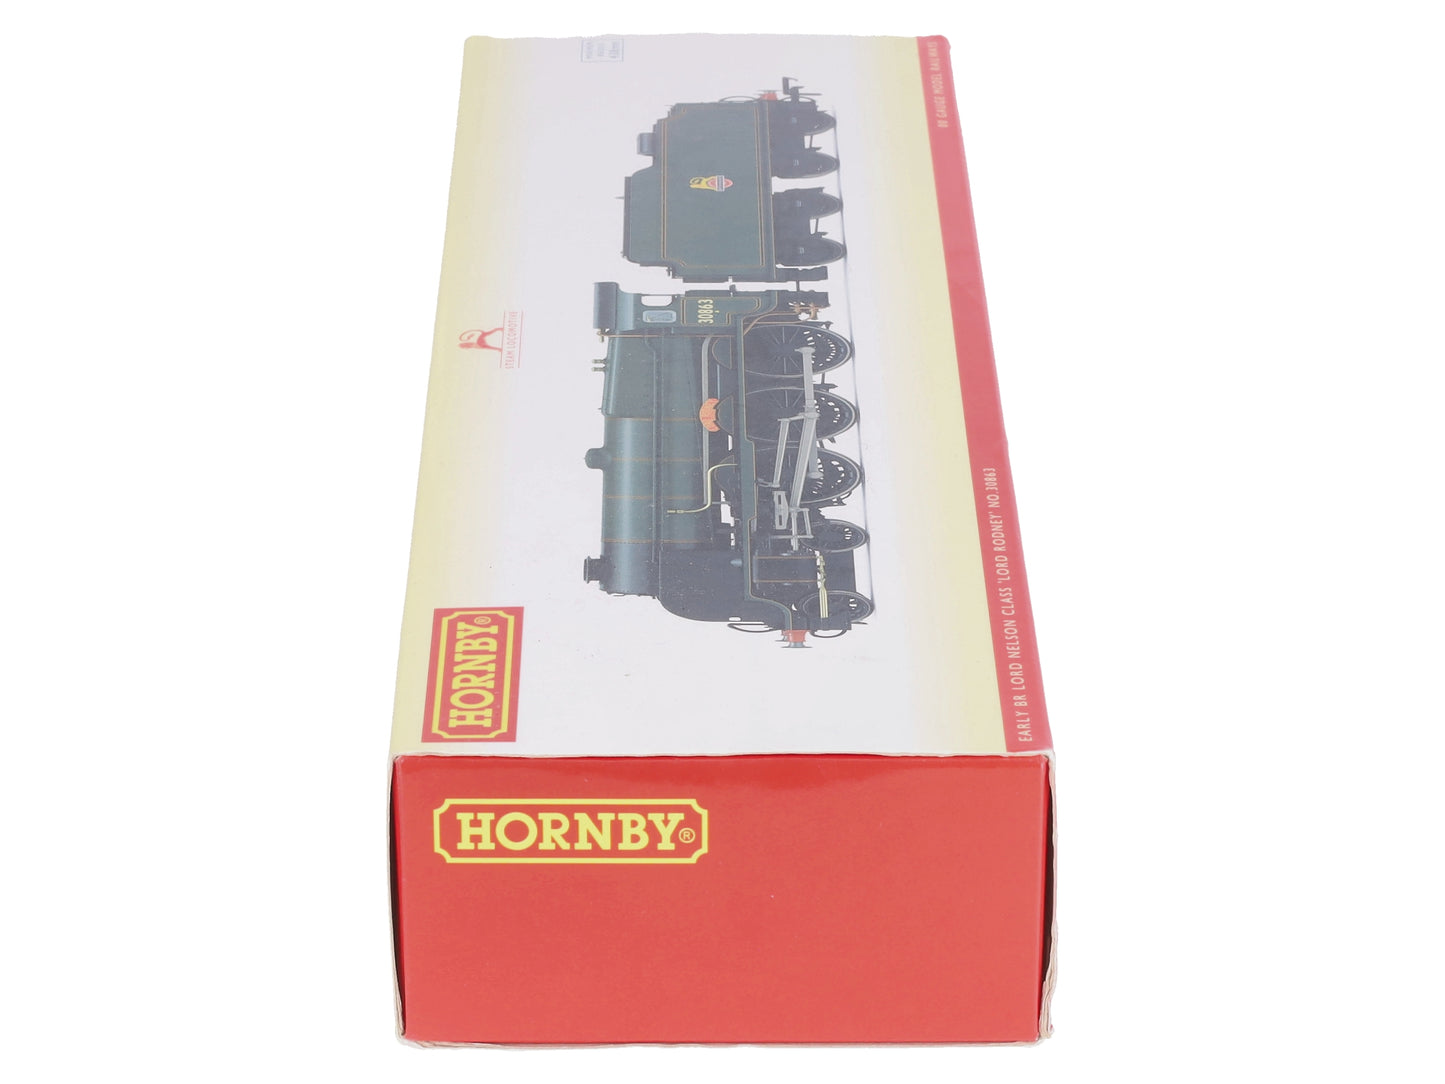 Hornby R3635 OO BR Lord Rodney Lord Nelson Steam Loco & Tender #30863 w/DCC LN/Box